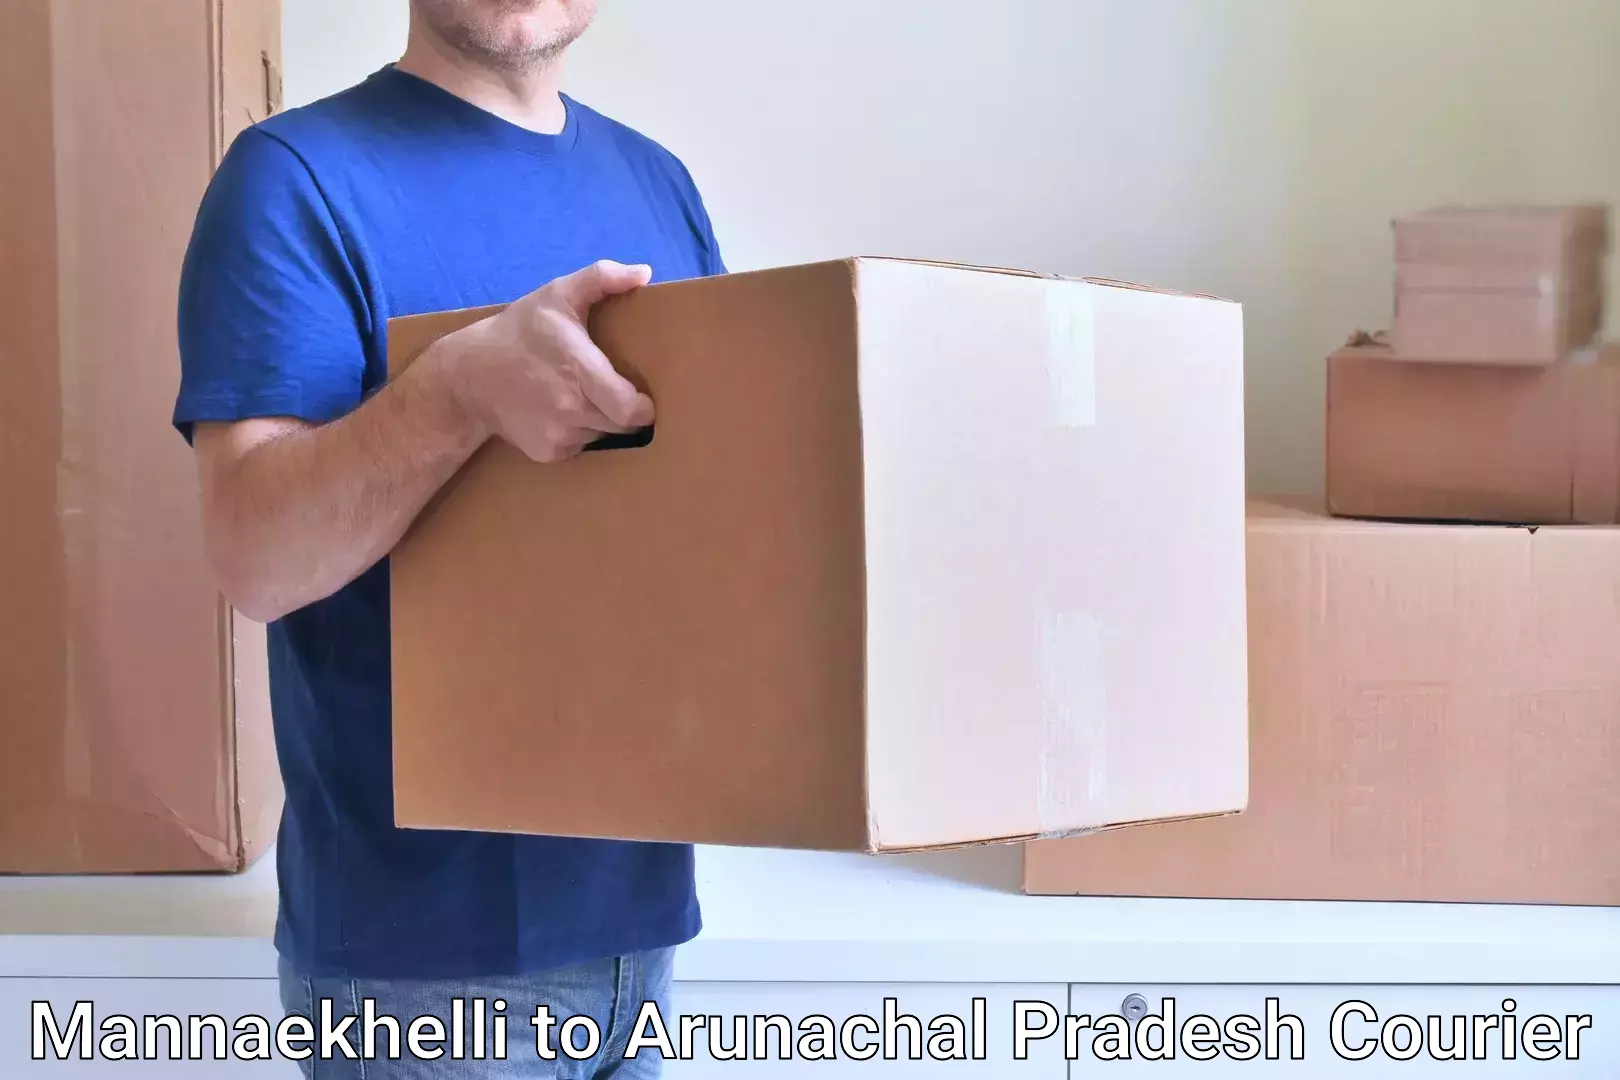 Efficient shipping platforms Mannaekhelli to Arunachal Pradesh